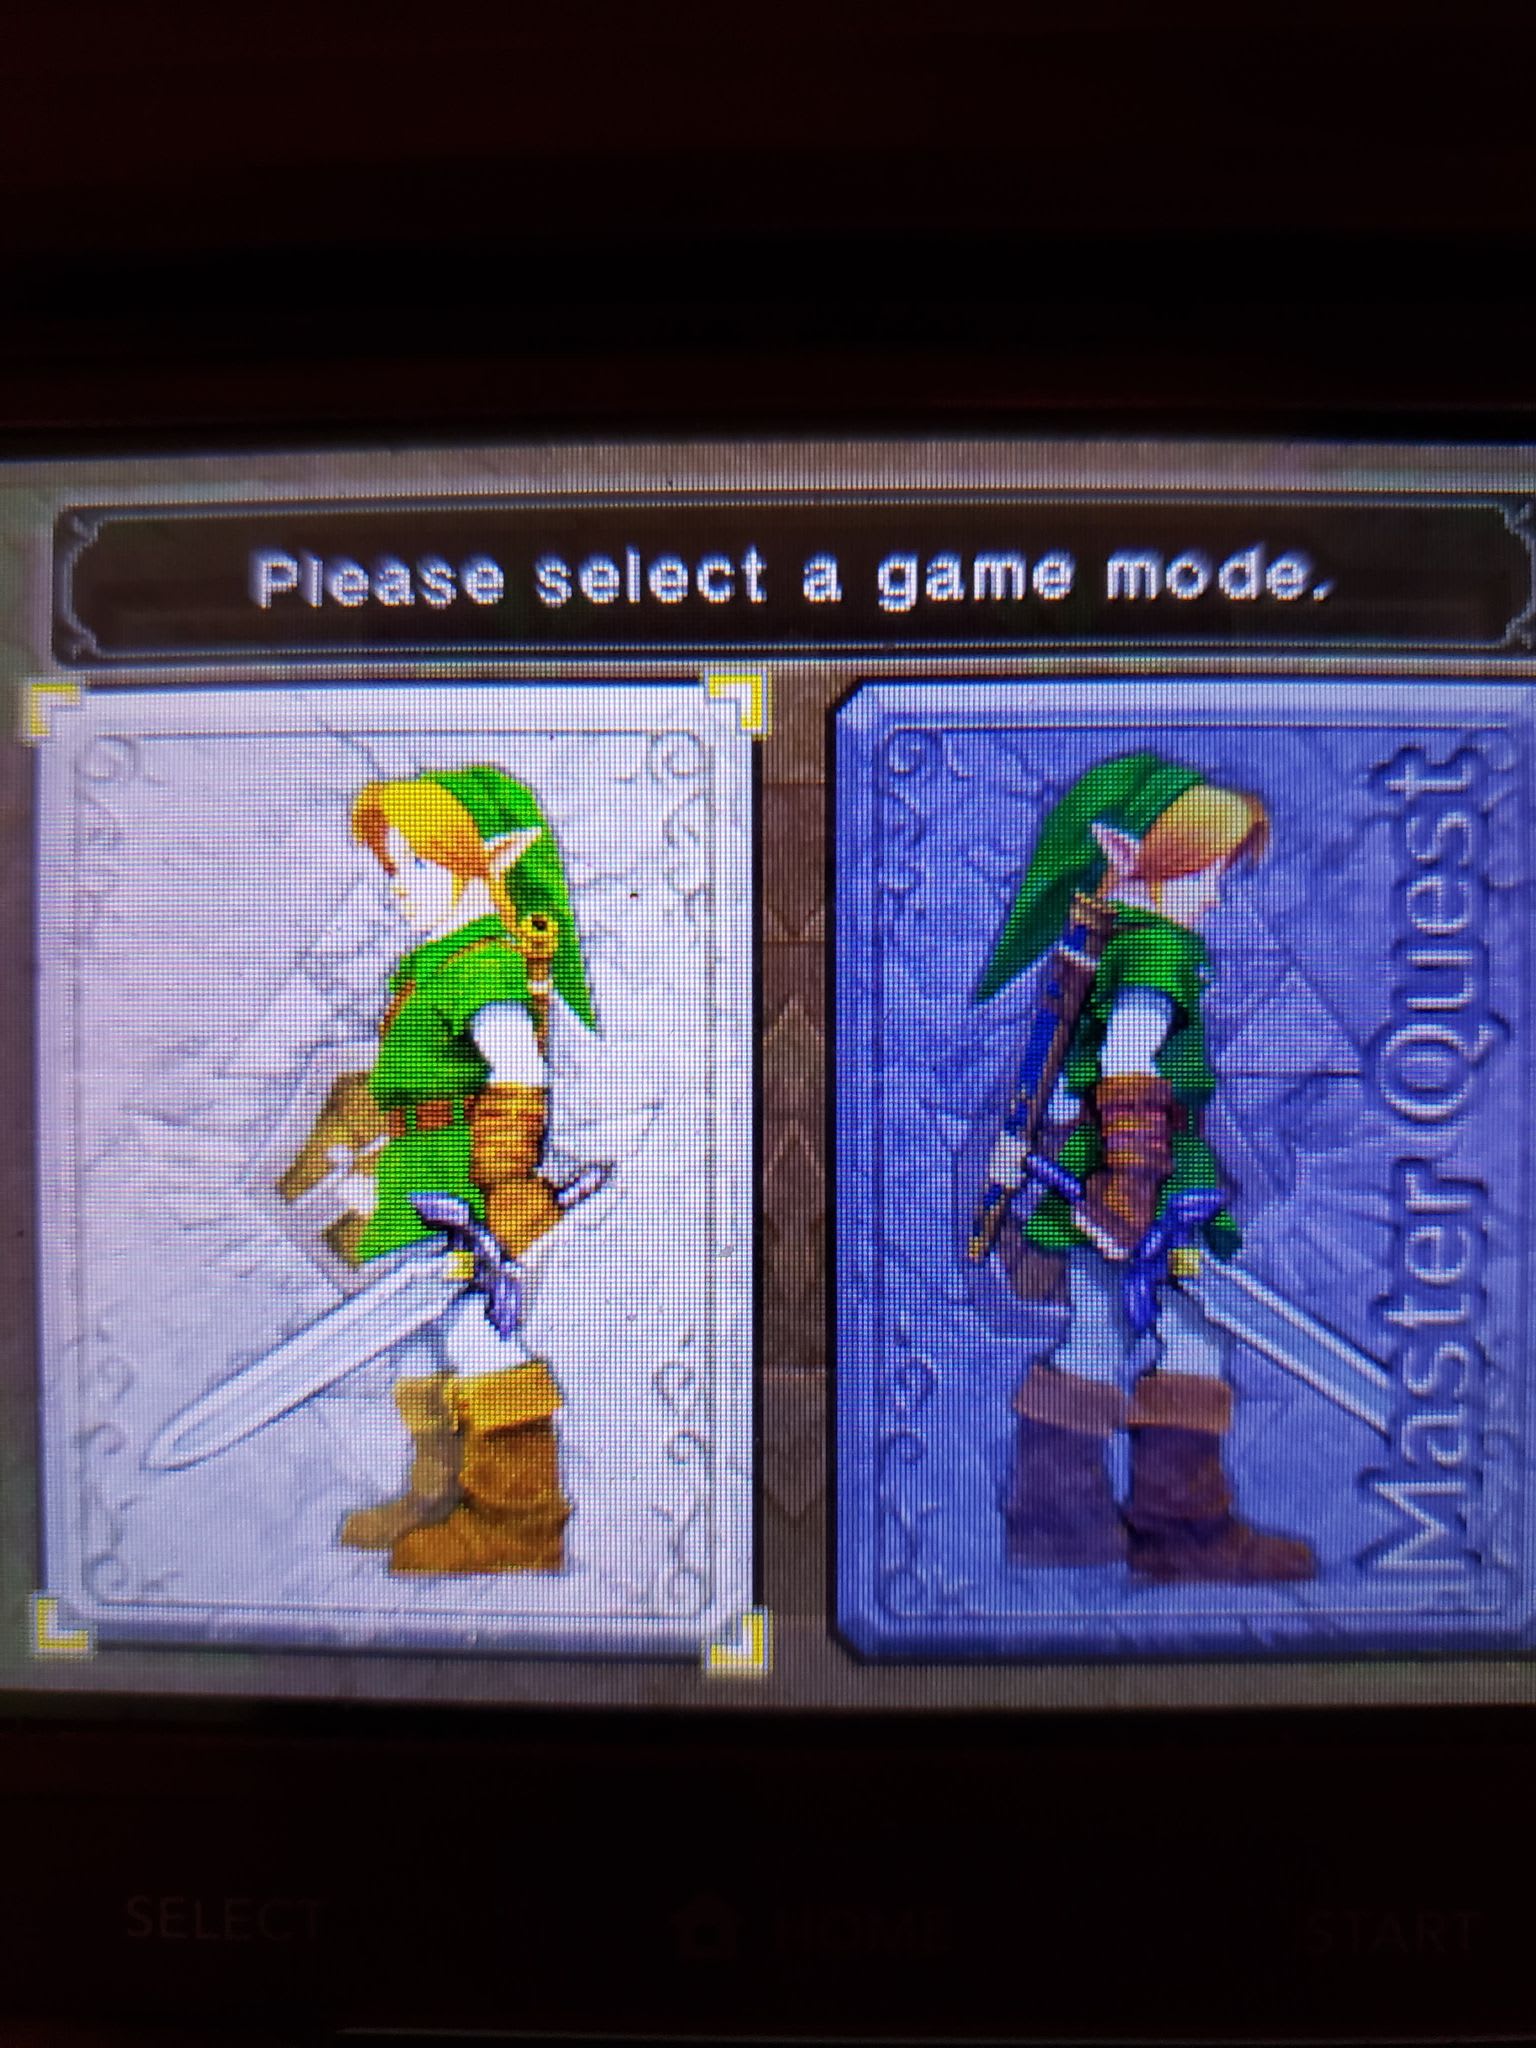 The Legend of Zelda: Ocarina of Time Master Quest, Nintendo